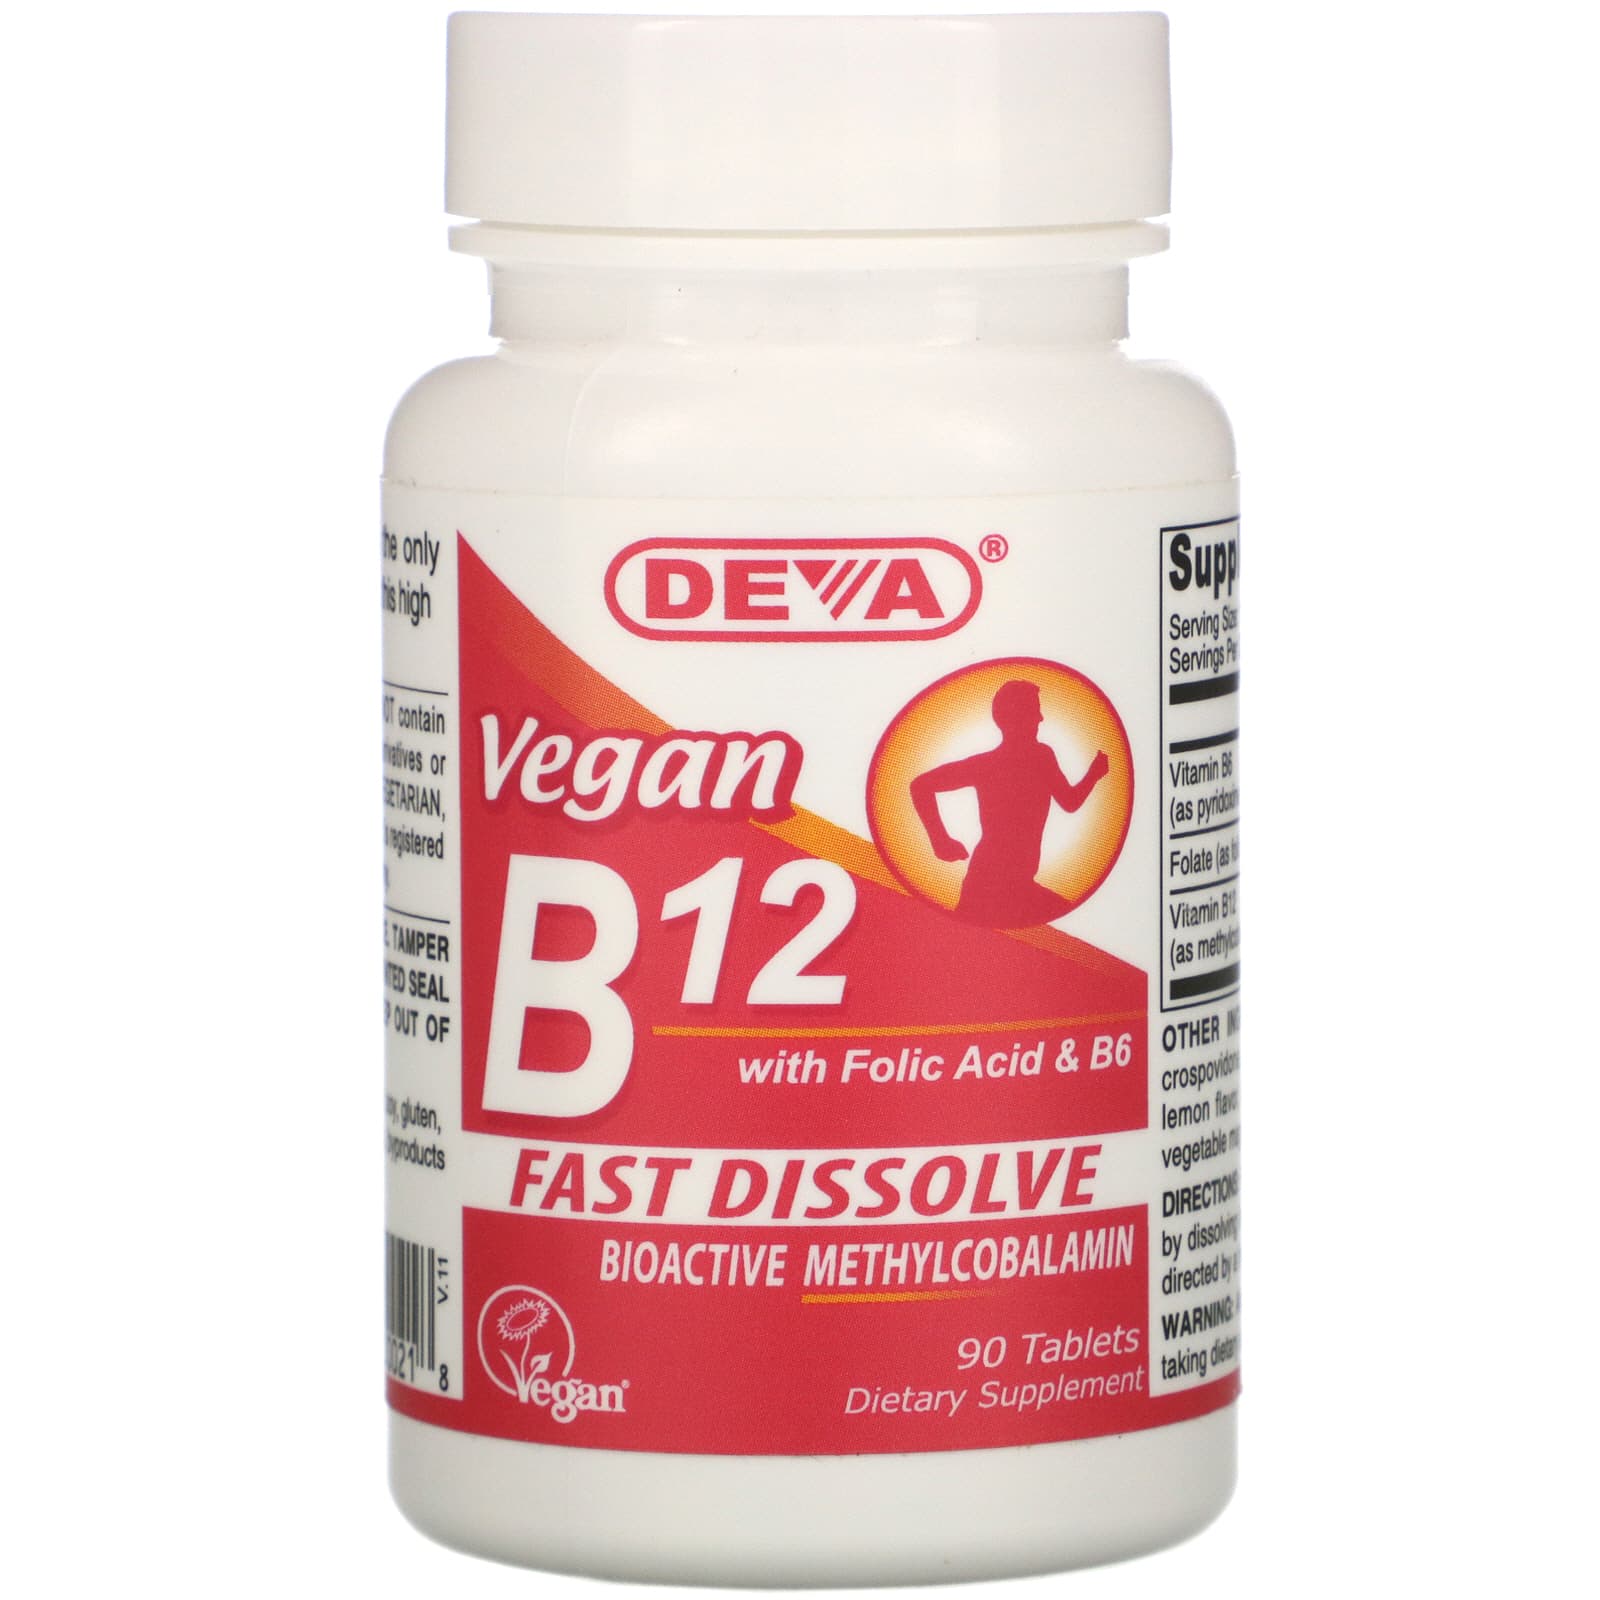 Витамин е с фолиевой кислотой. Метилкобаламин витамин в12. Deva, Vegan b12 with folic acid & b6, fast-dissolve, 90 Tablets. Витамин b12 препараты. Витамин b12 в таблетках.